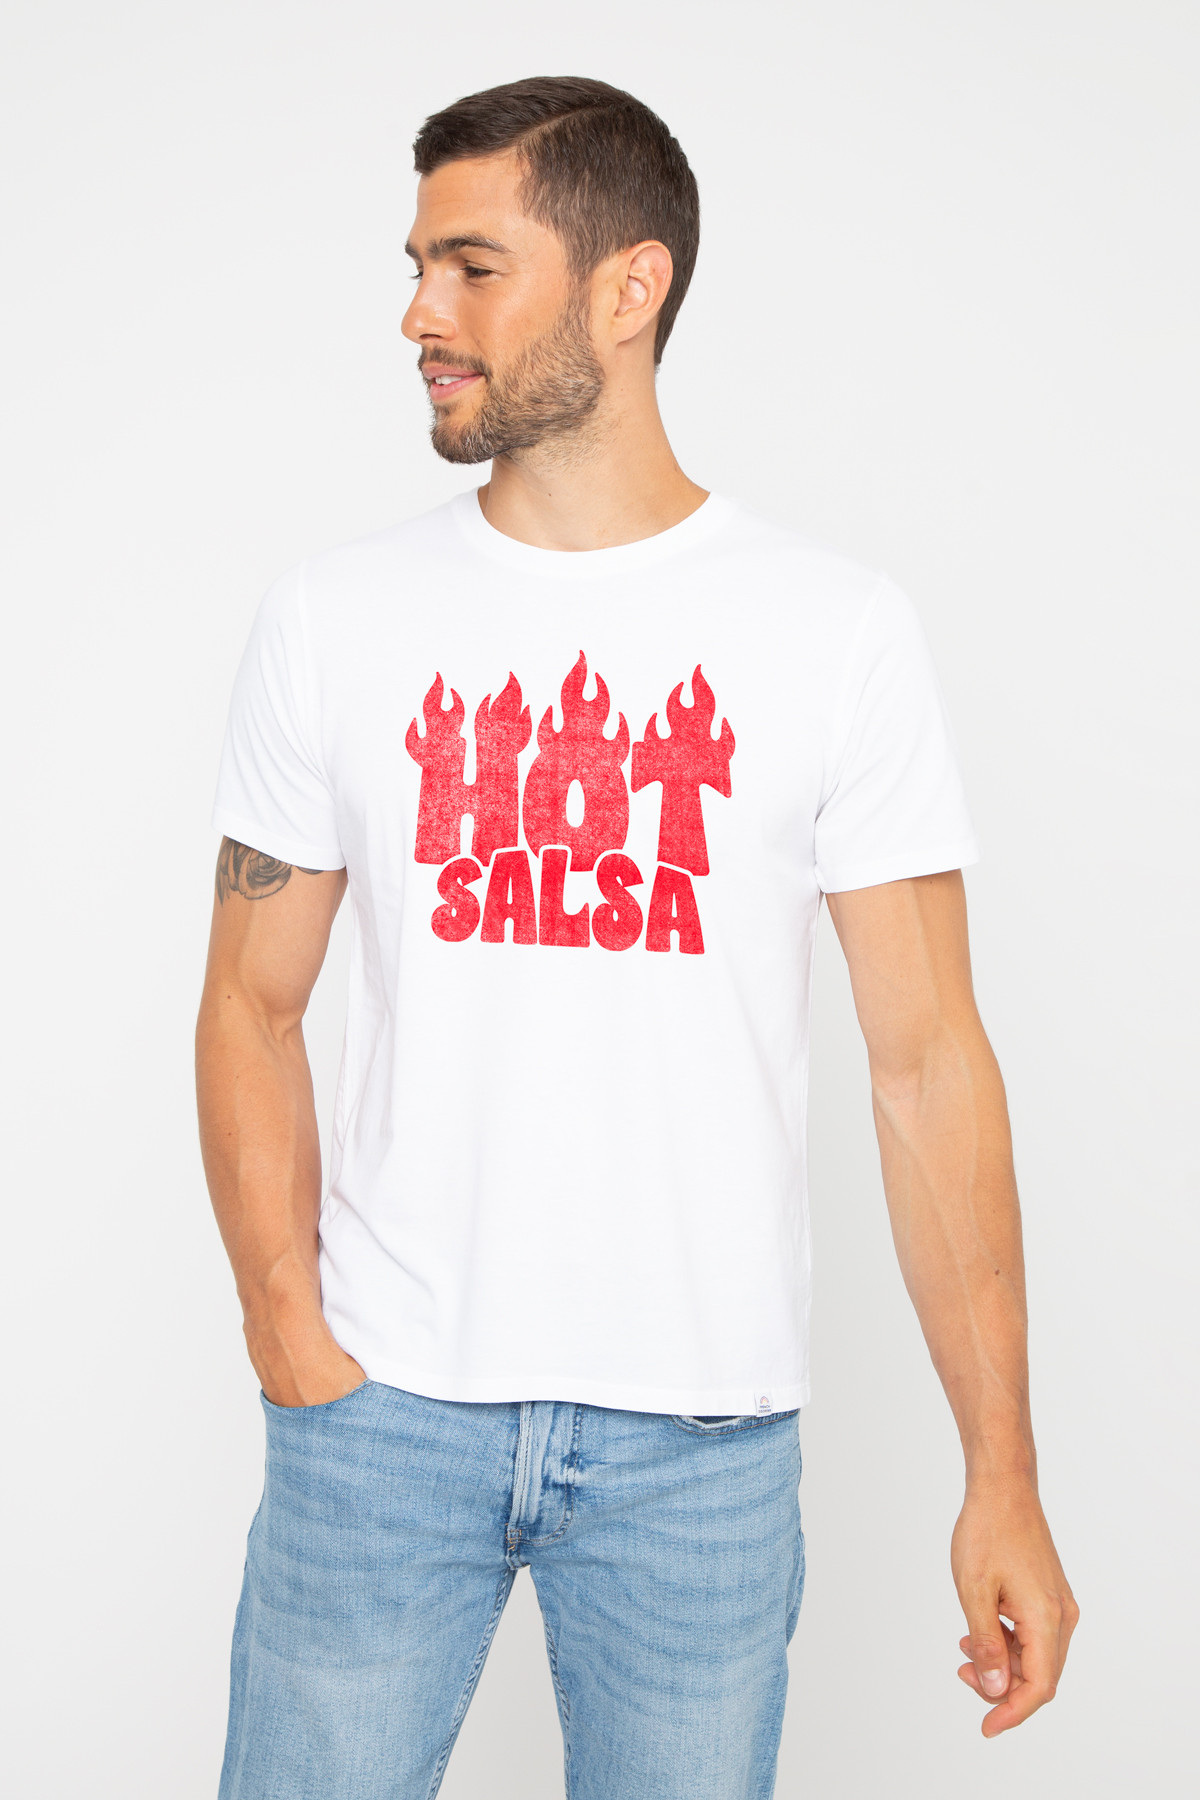 Tshirt HOT SALSA French Disorder